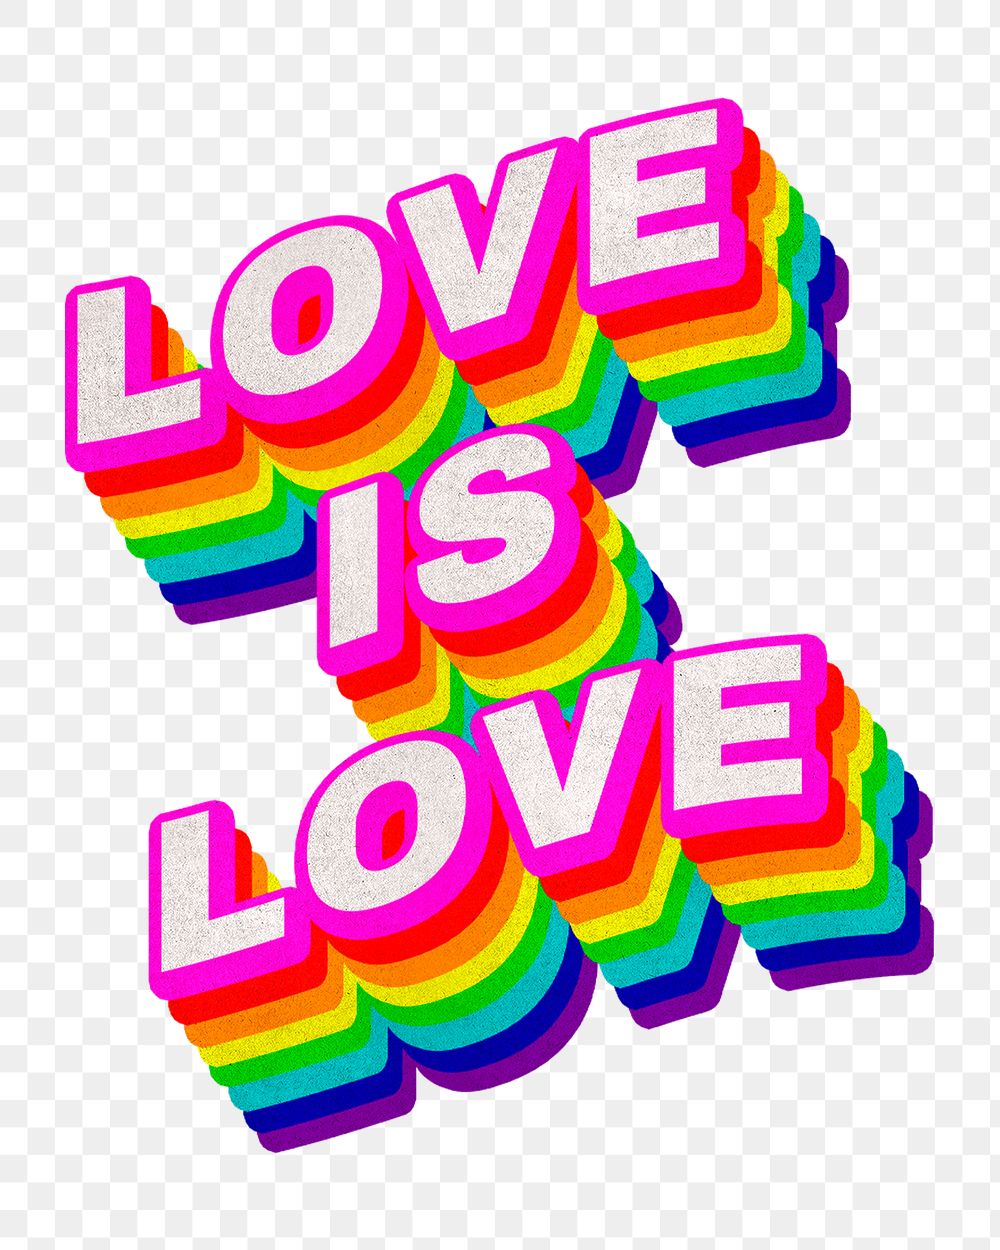 Rainbow word LOVE IS LOVE typography design element